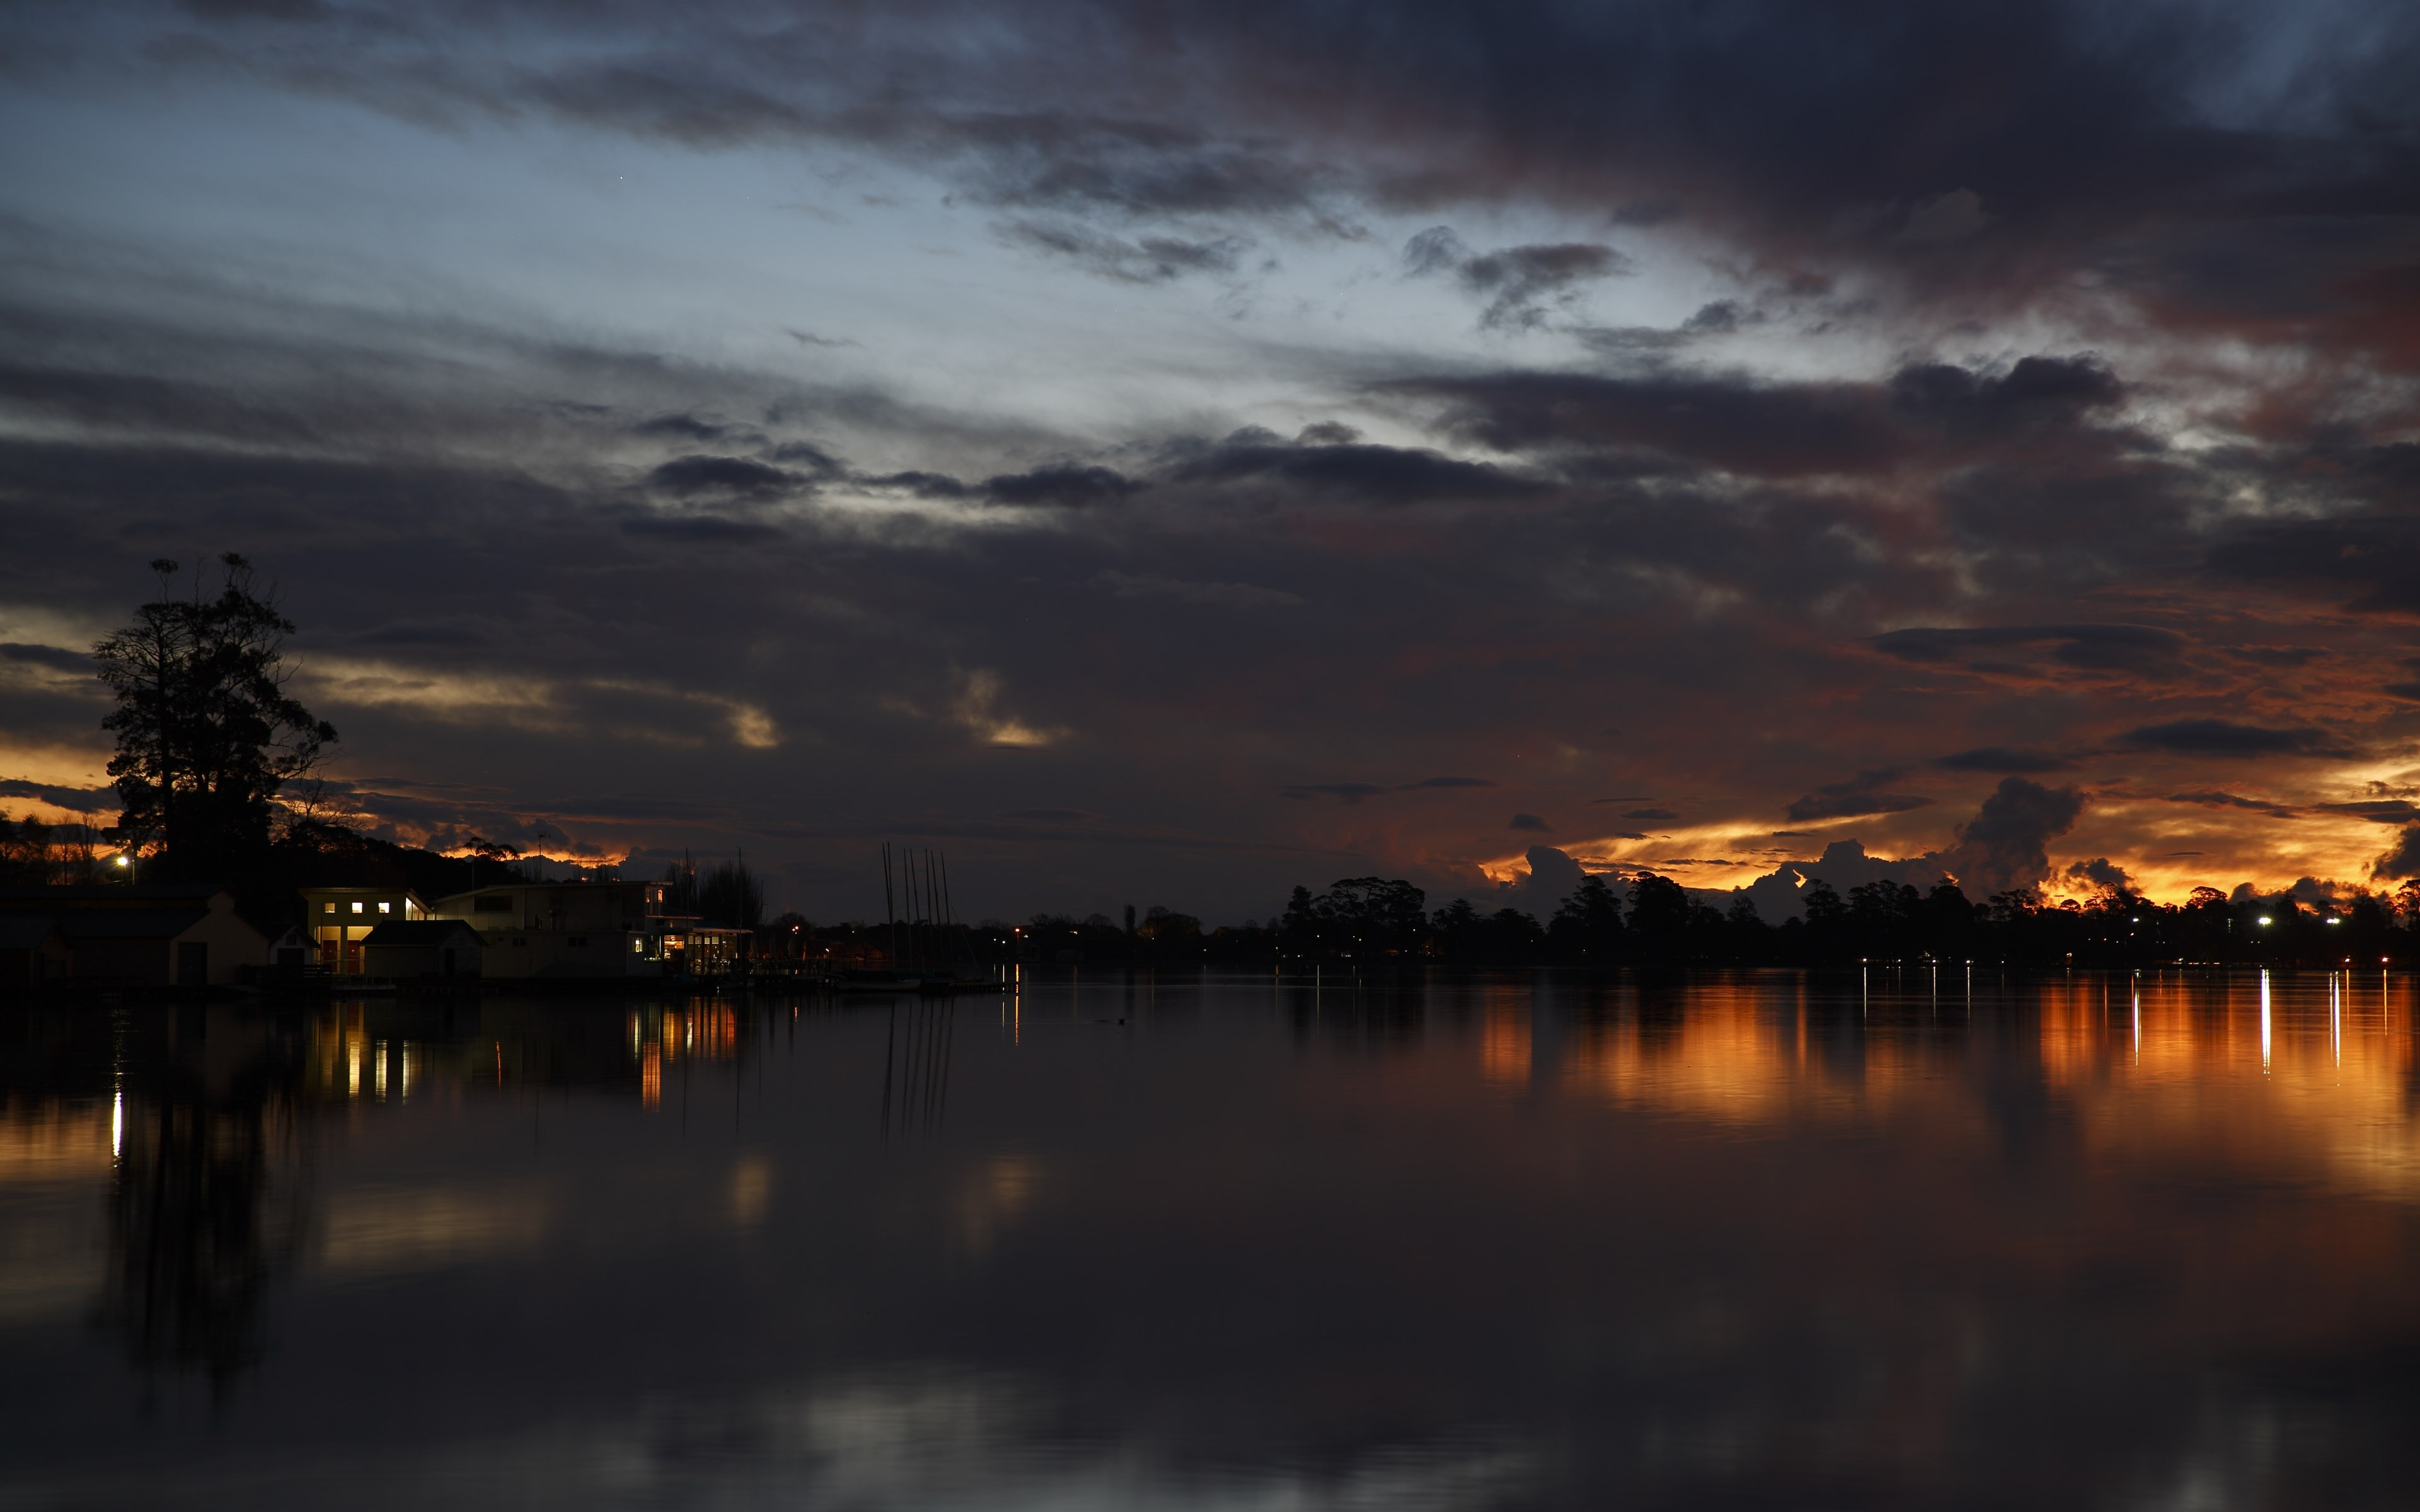 Download wallpaper: Sunset above Lake Wendouree in Australia 3840x2400